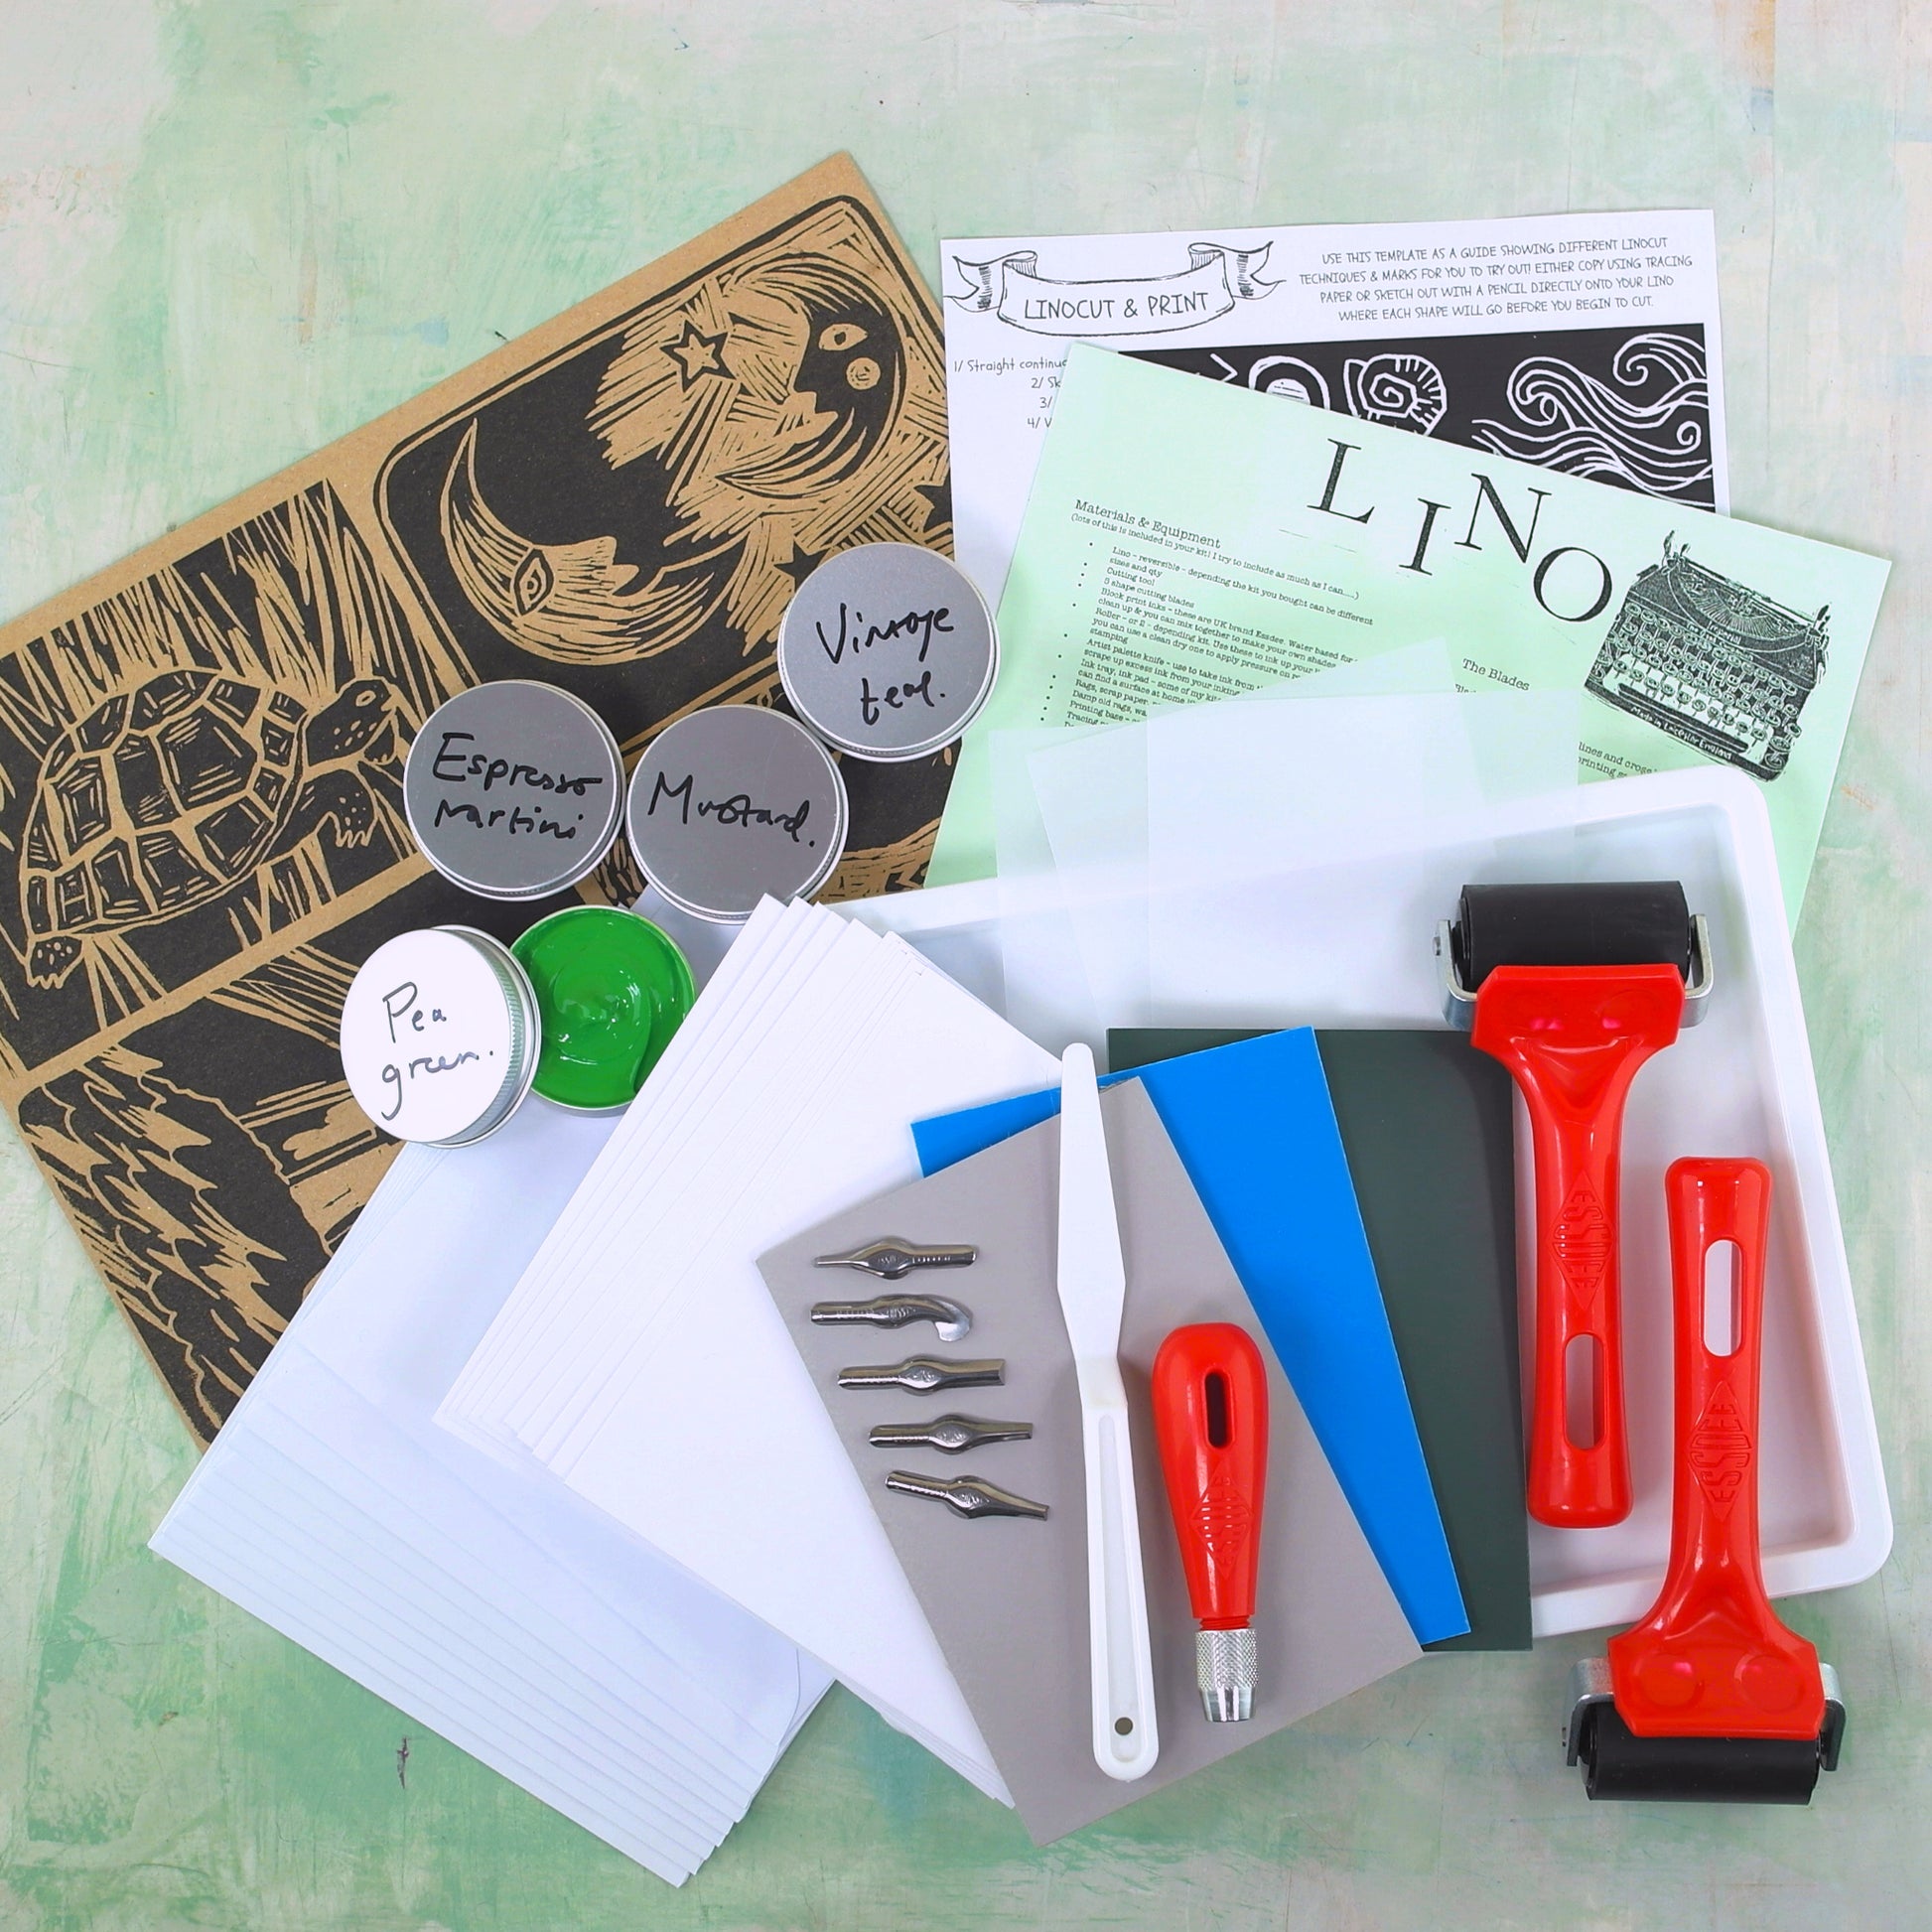 Linocut & print compact starter kit – Clever Hands